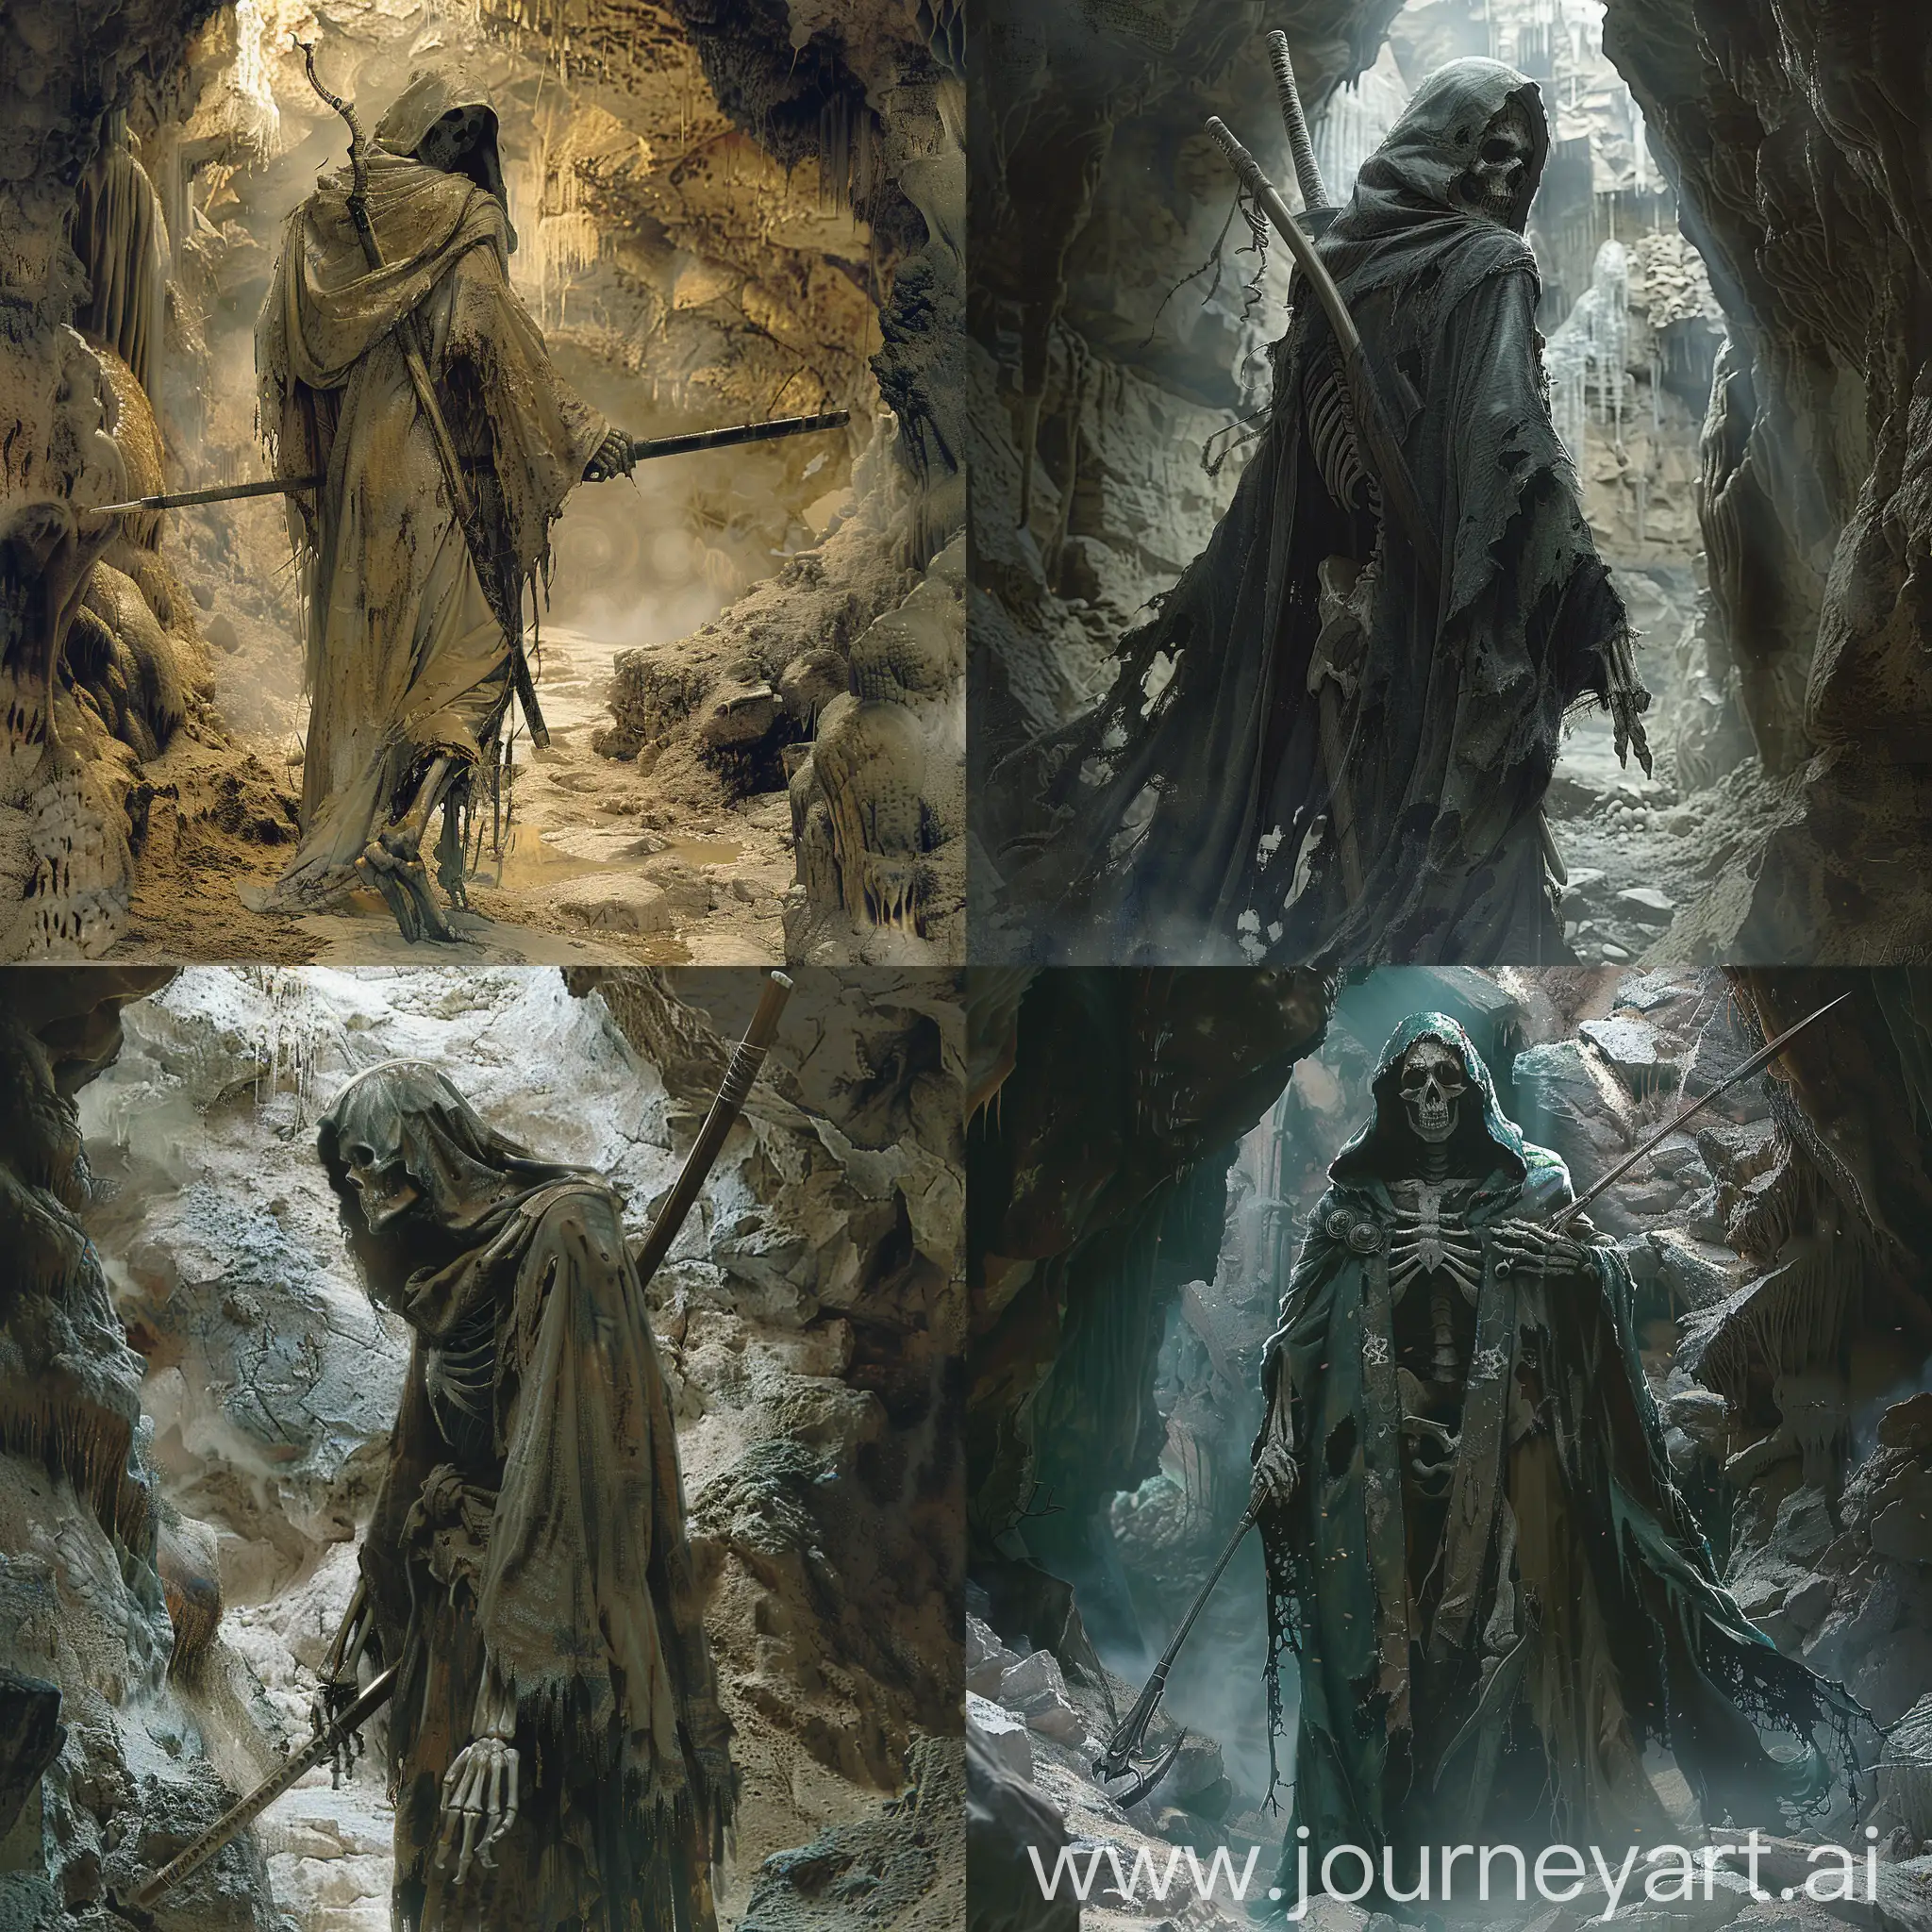 Terrifying-Skeleton-Warrior-with-Naginata-in-Underground-Cave-Digital-Fantasy-Art